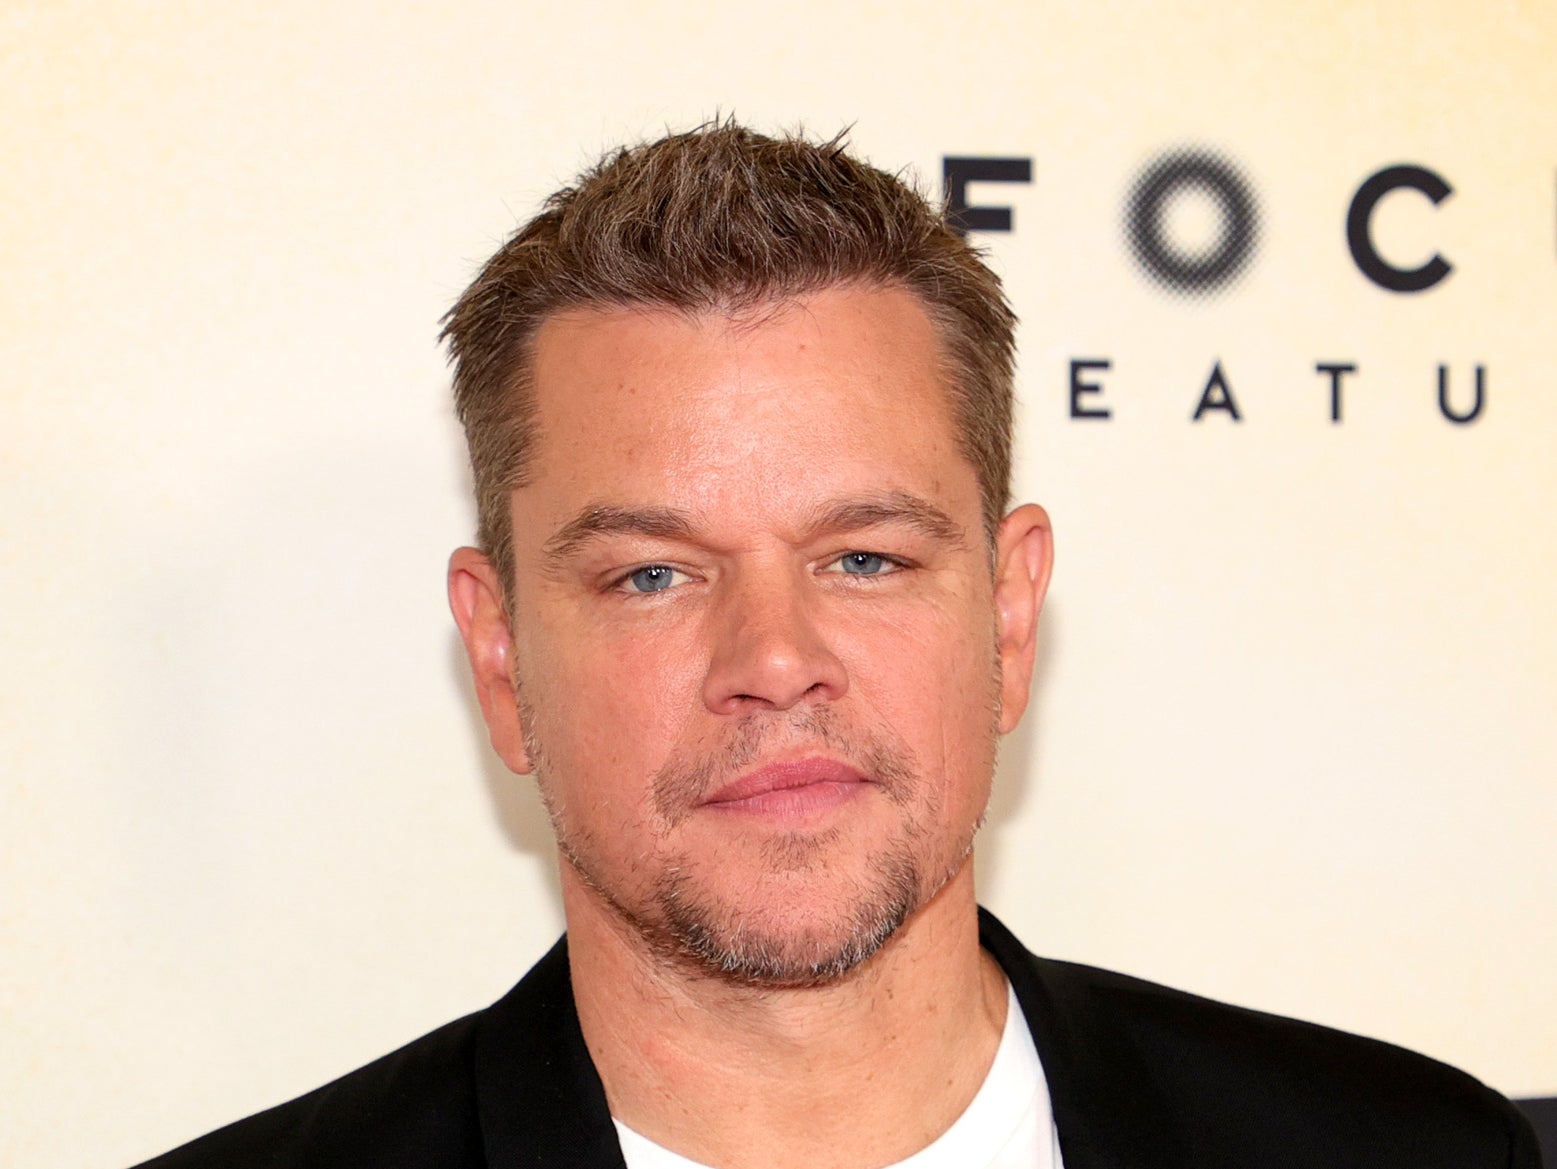 Matt Damon had candid words about ‘The Bourne Ultimatum’